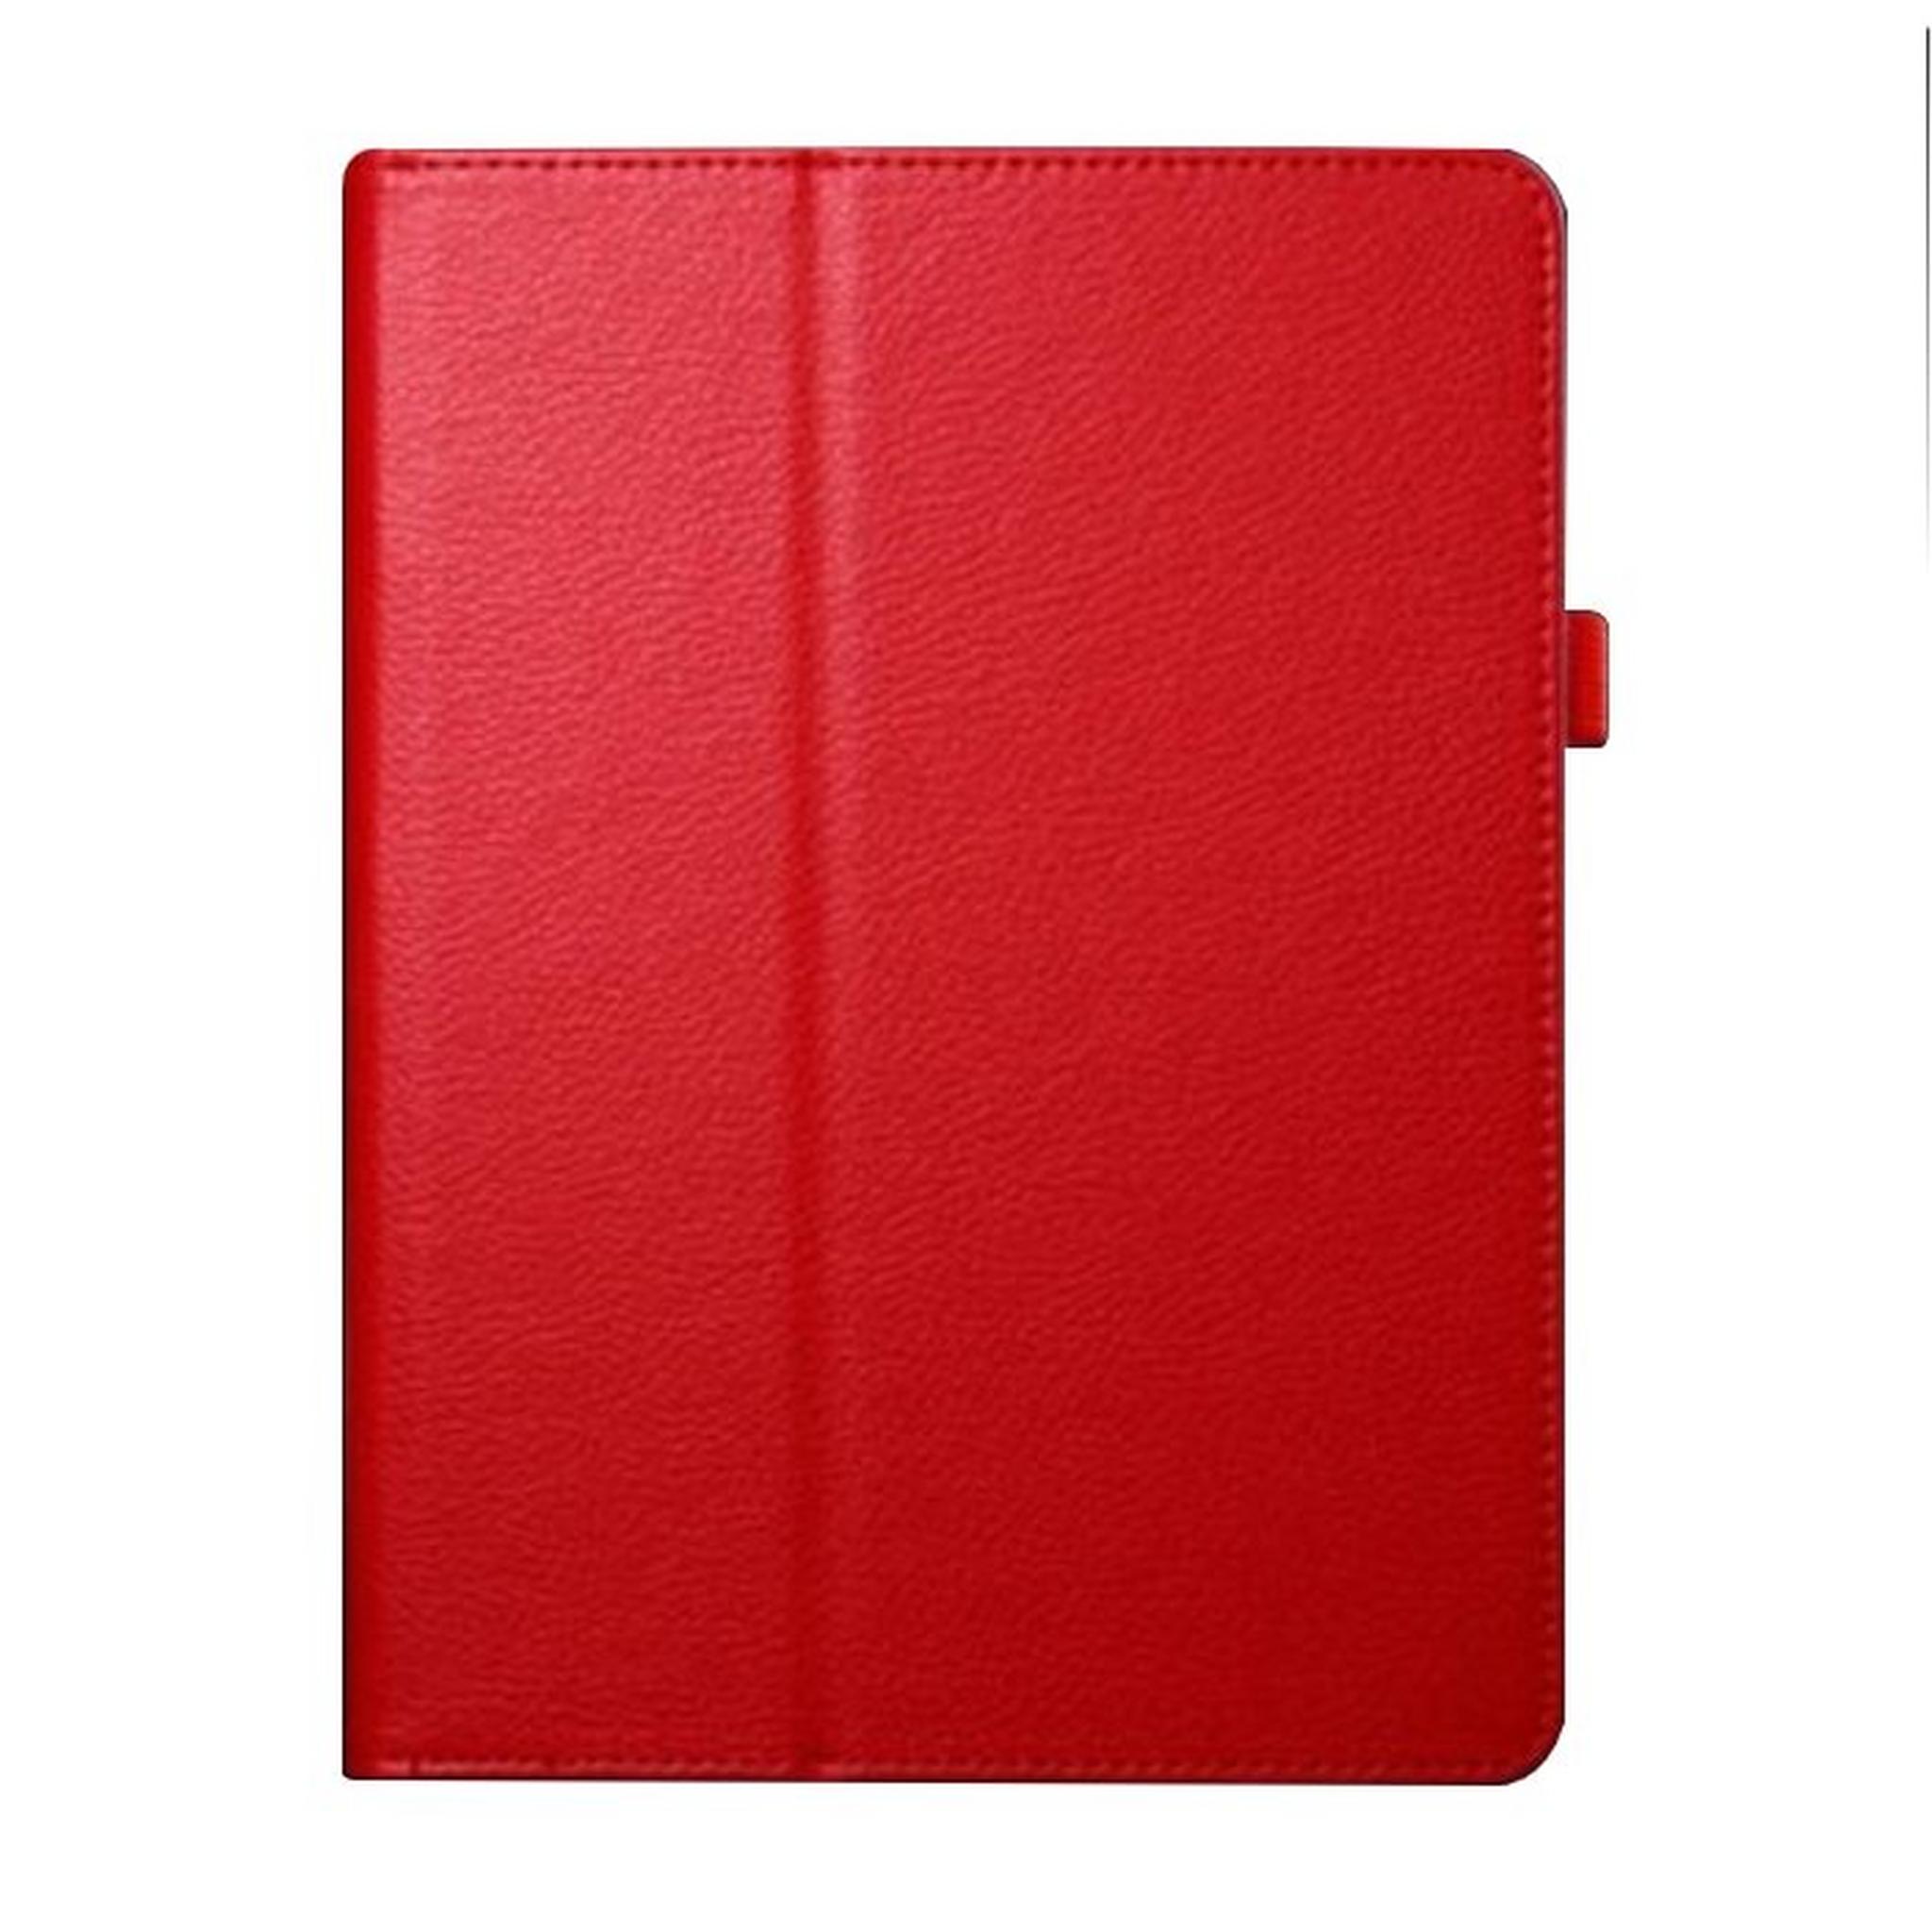 EQ Book Folio 7-inch Tablet Case - Red